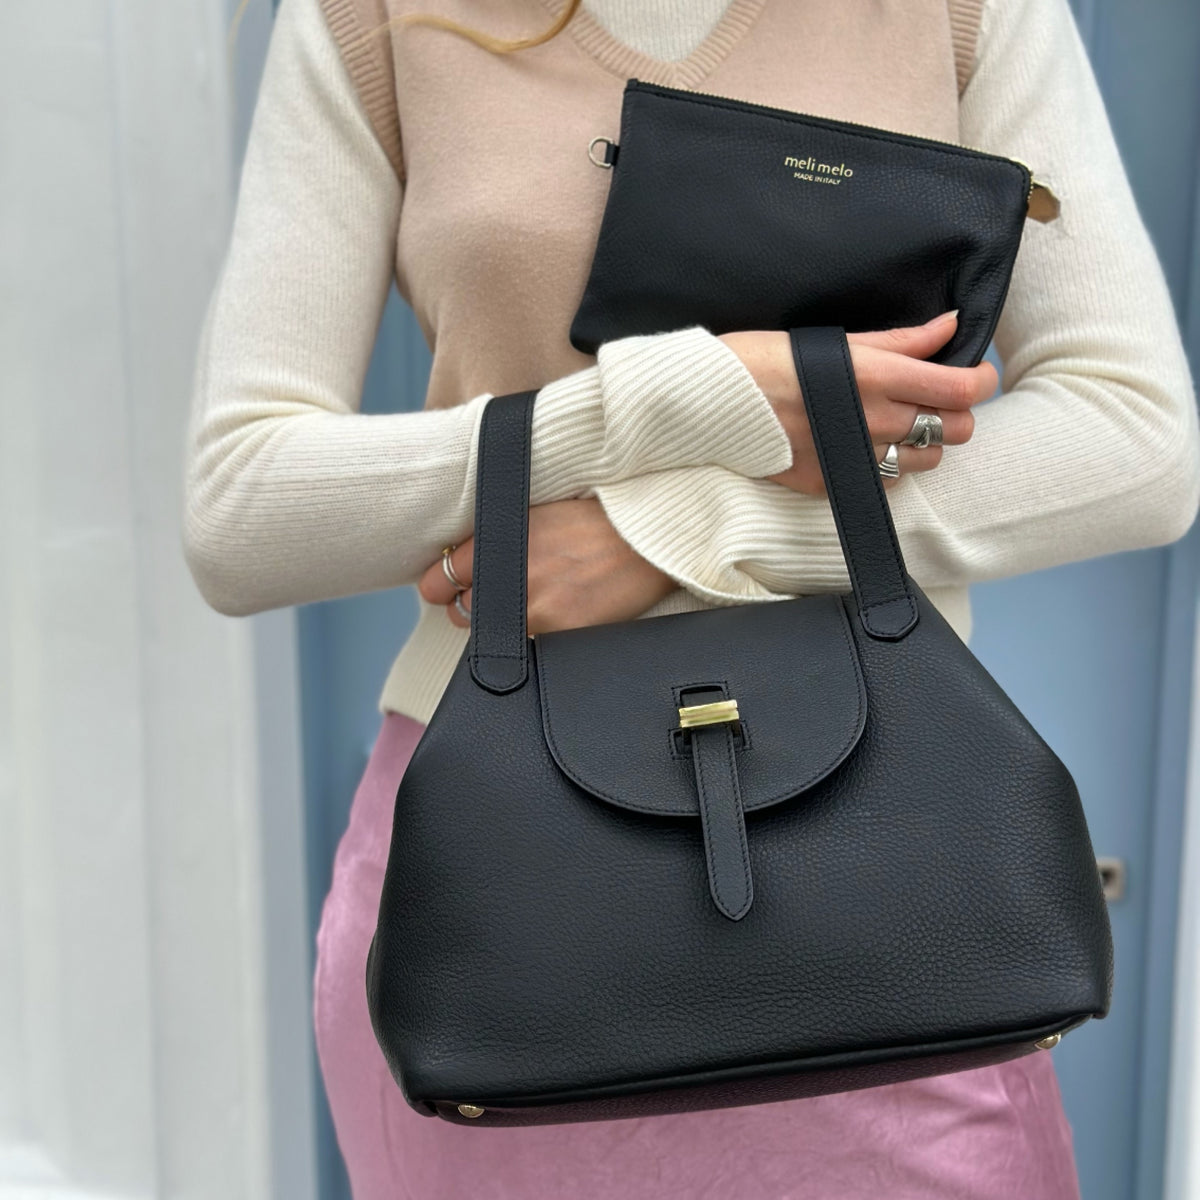 Meli Melo La Segreta Thela Black Leather Tote Bag For Women